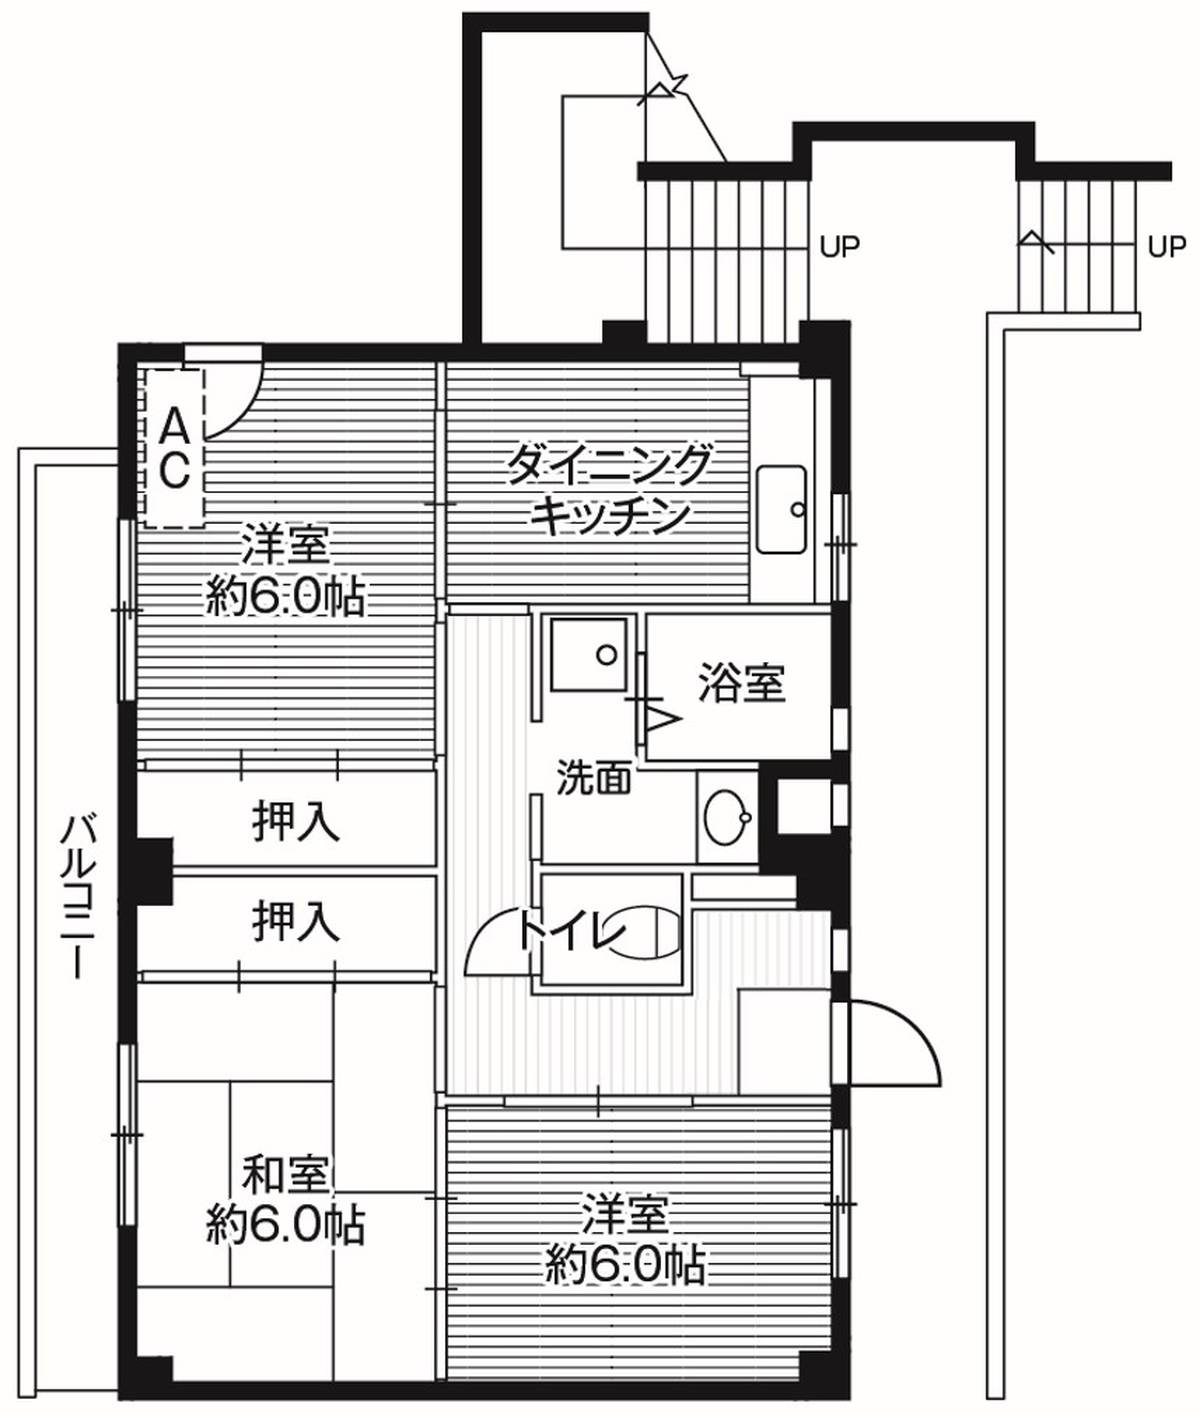 2LDK floorplan of Village House Chigusa in Hanamigawa-ku